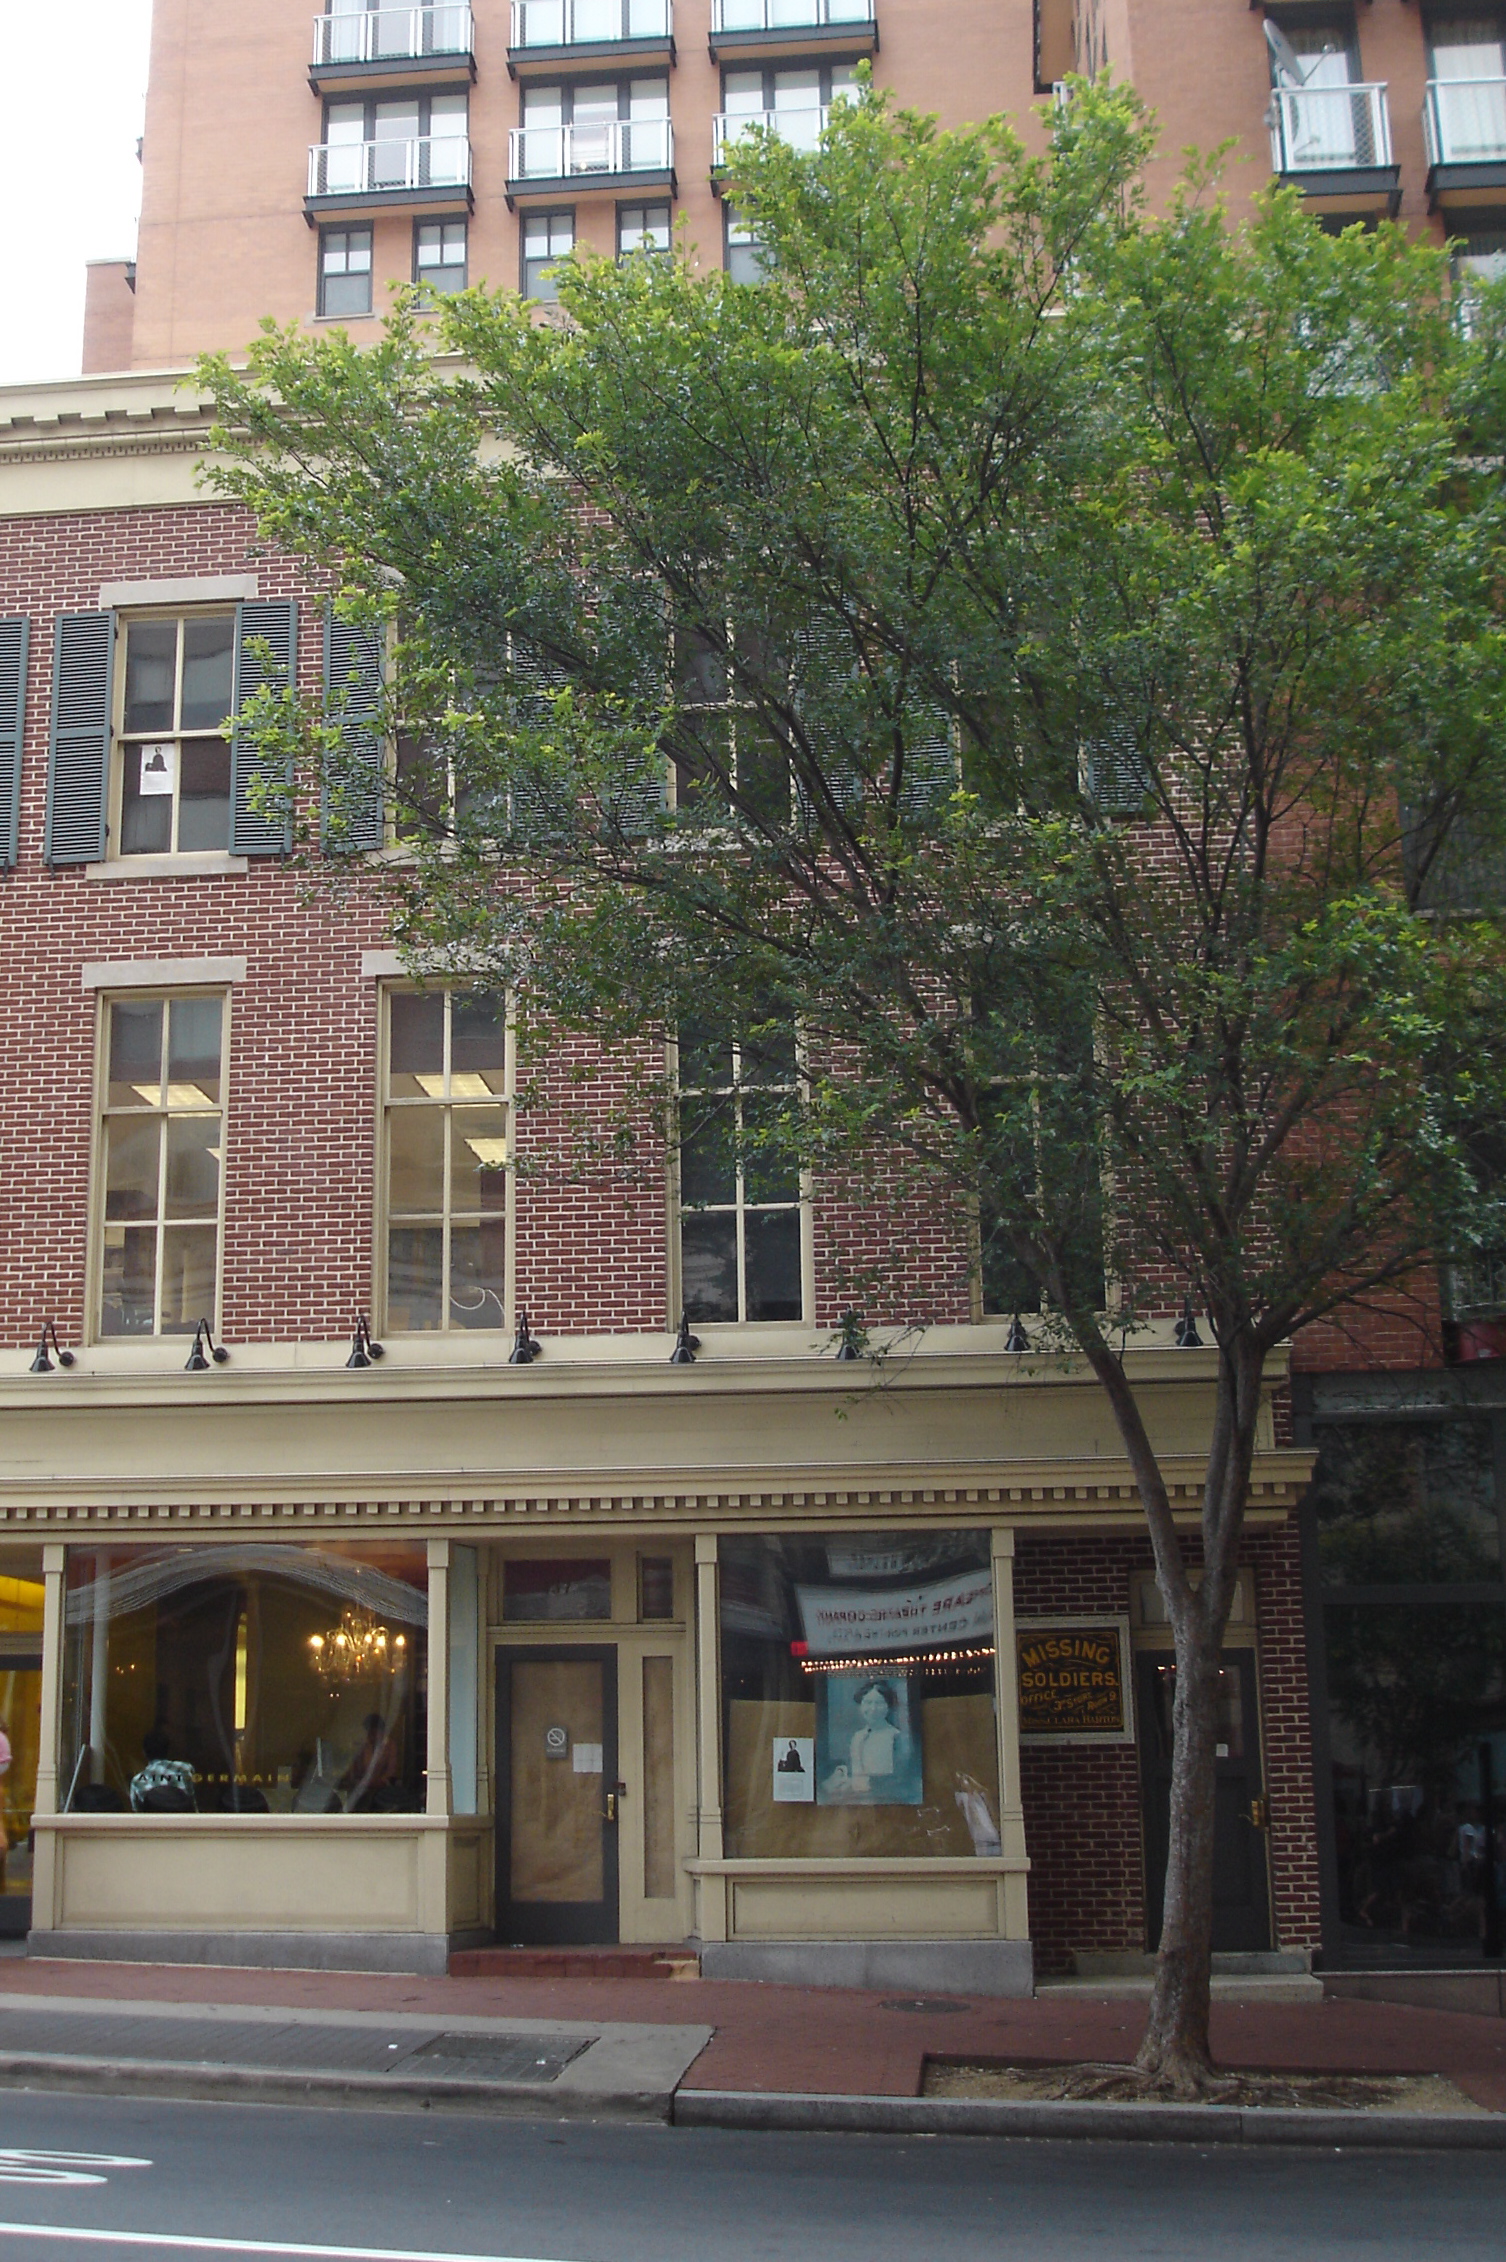 Clara Barton's Civil War Office (3rd floor, white sign)